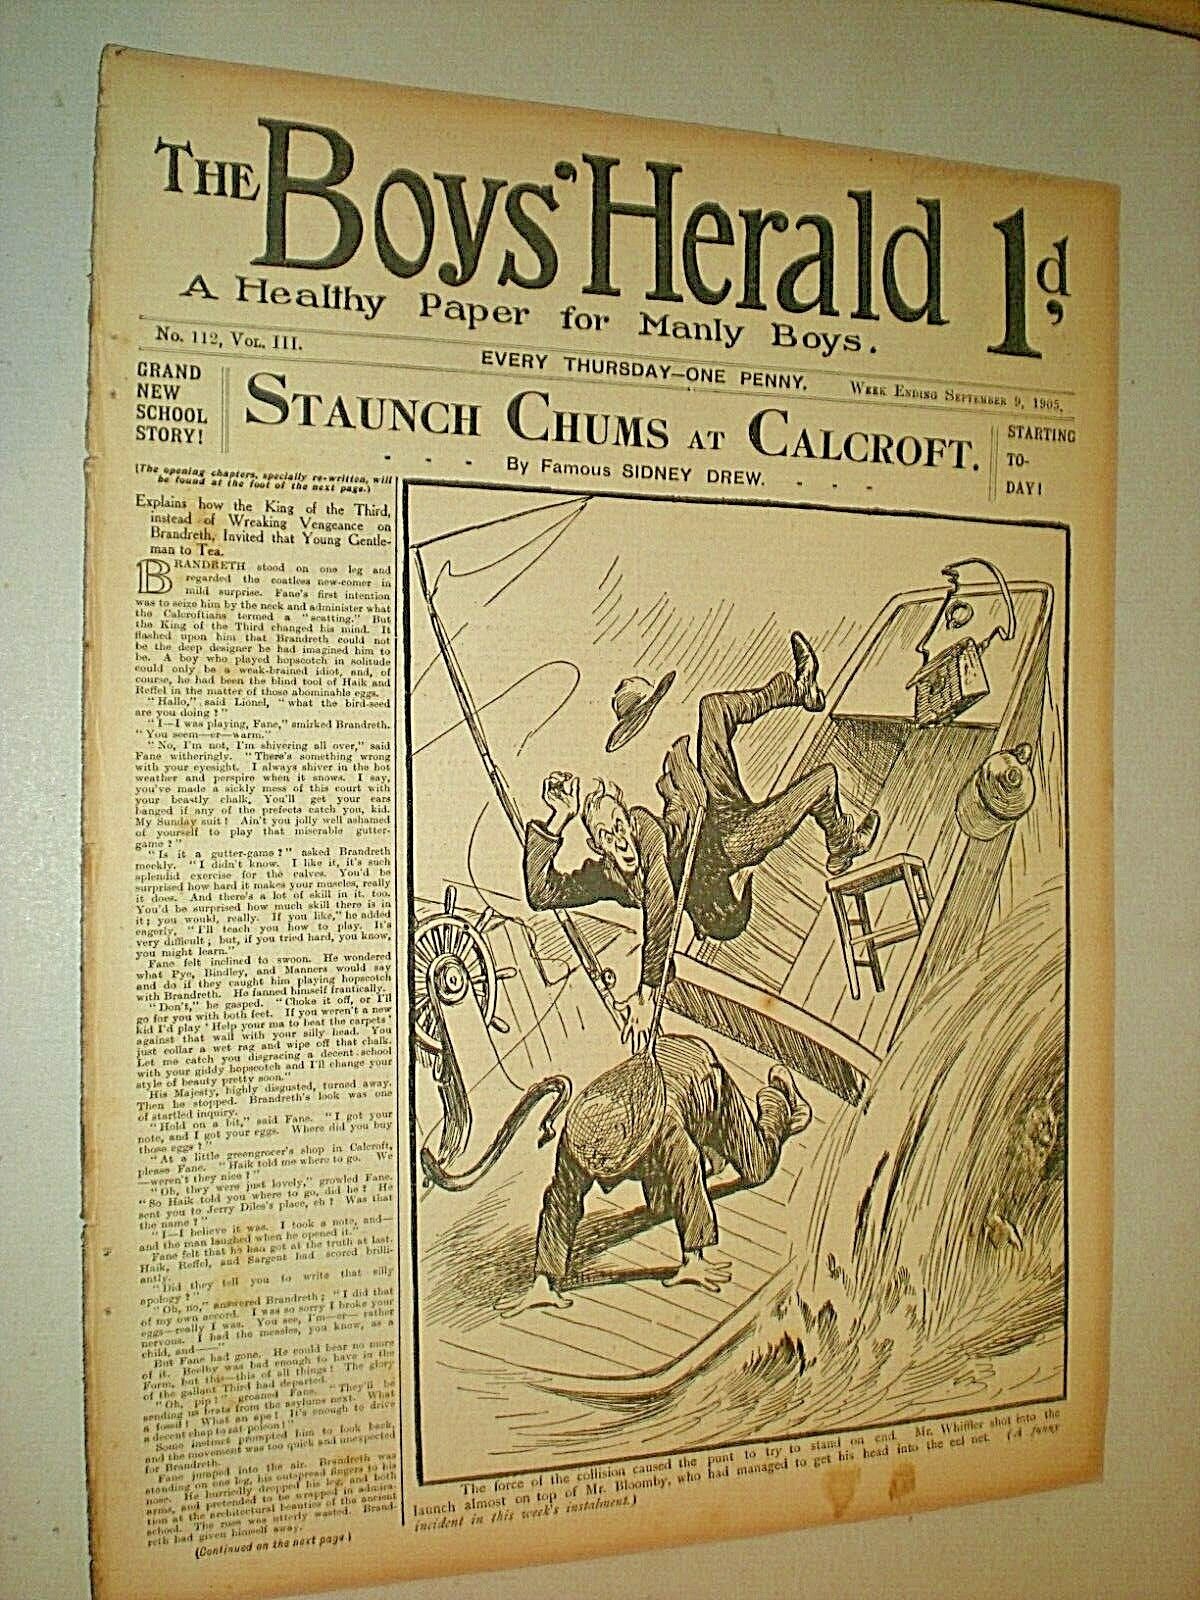 THE BOYS HERALD. SEPT 9th 1905. BOYS SCHOOL & ADVENTURE STORY PAPER. COMIC 